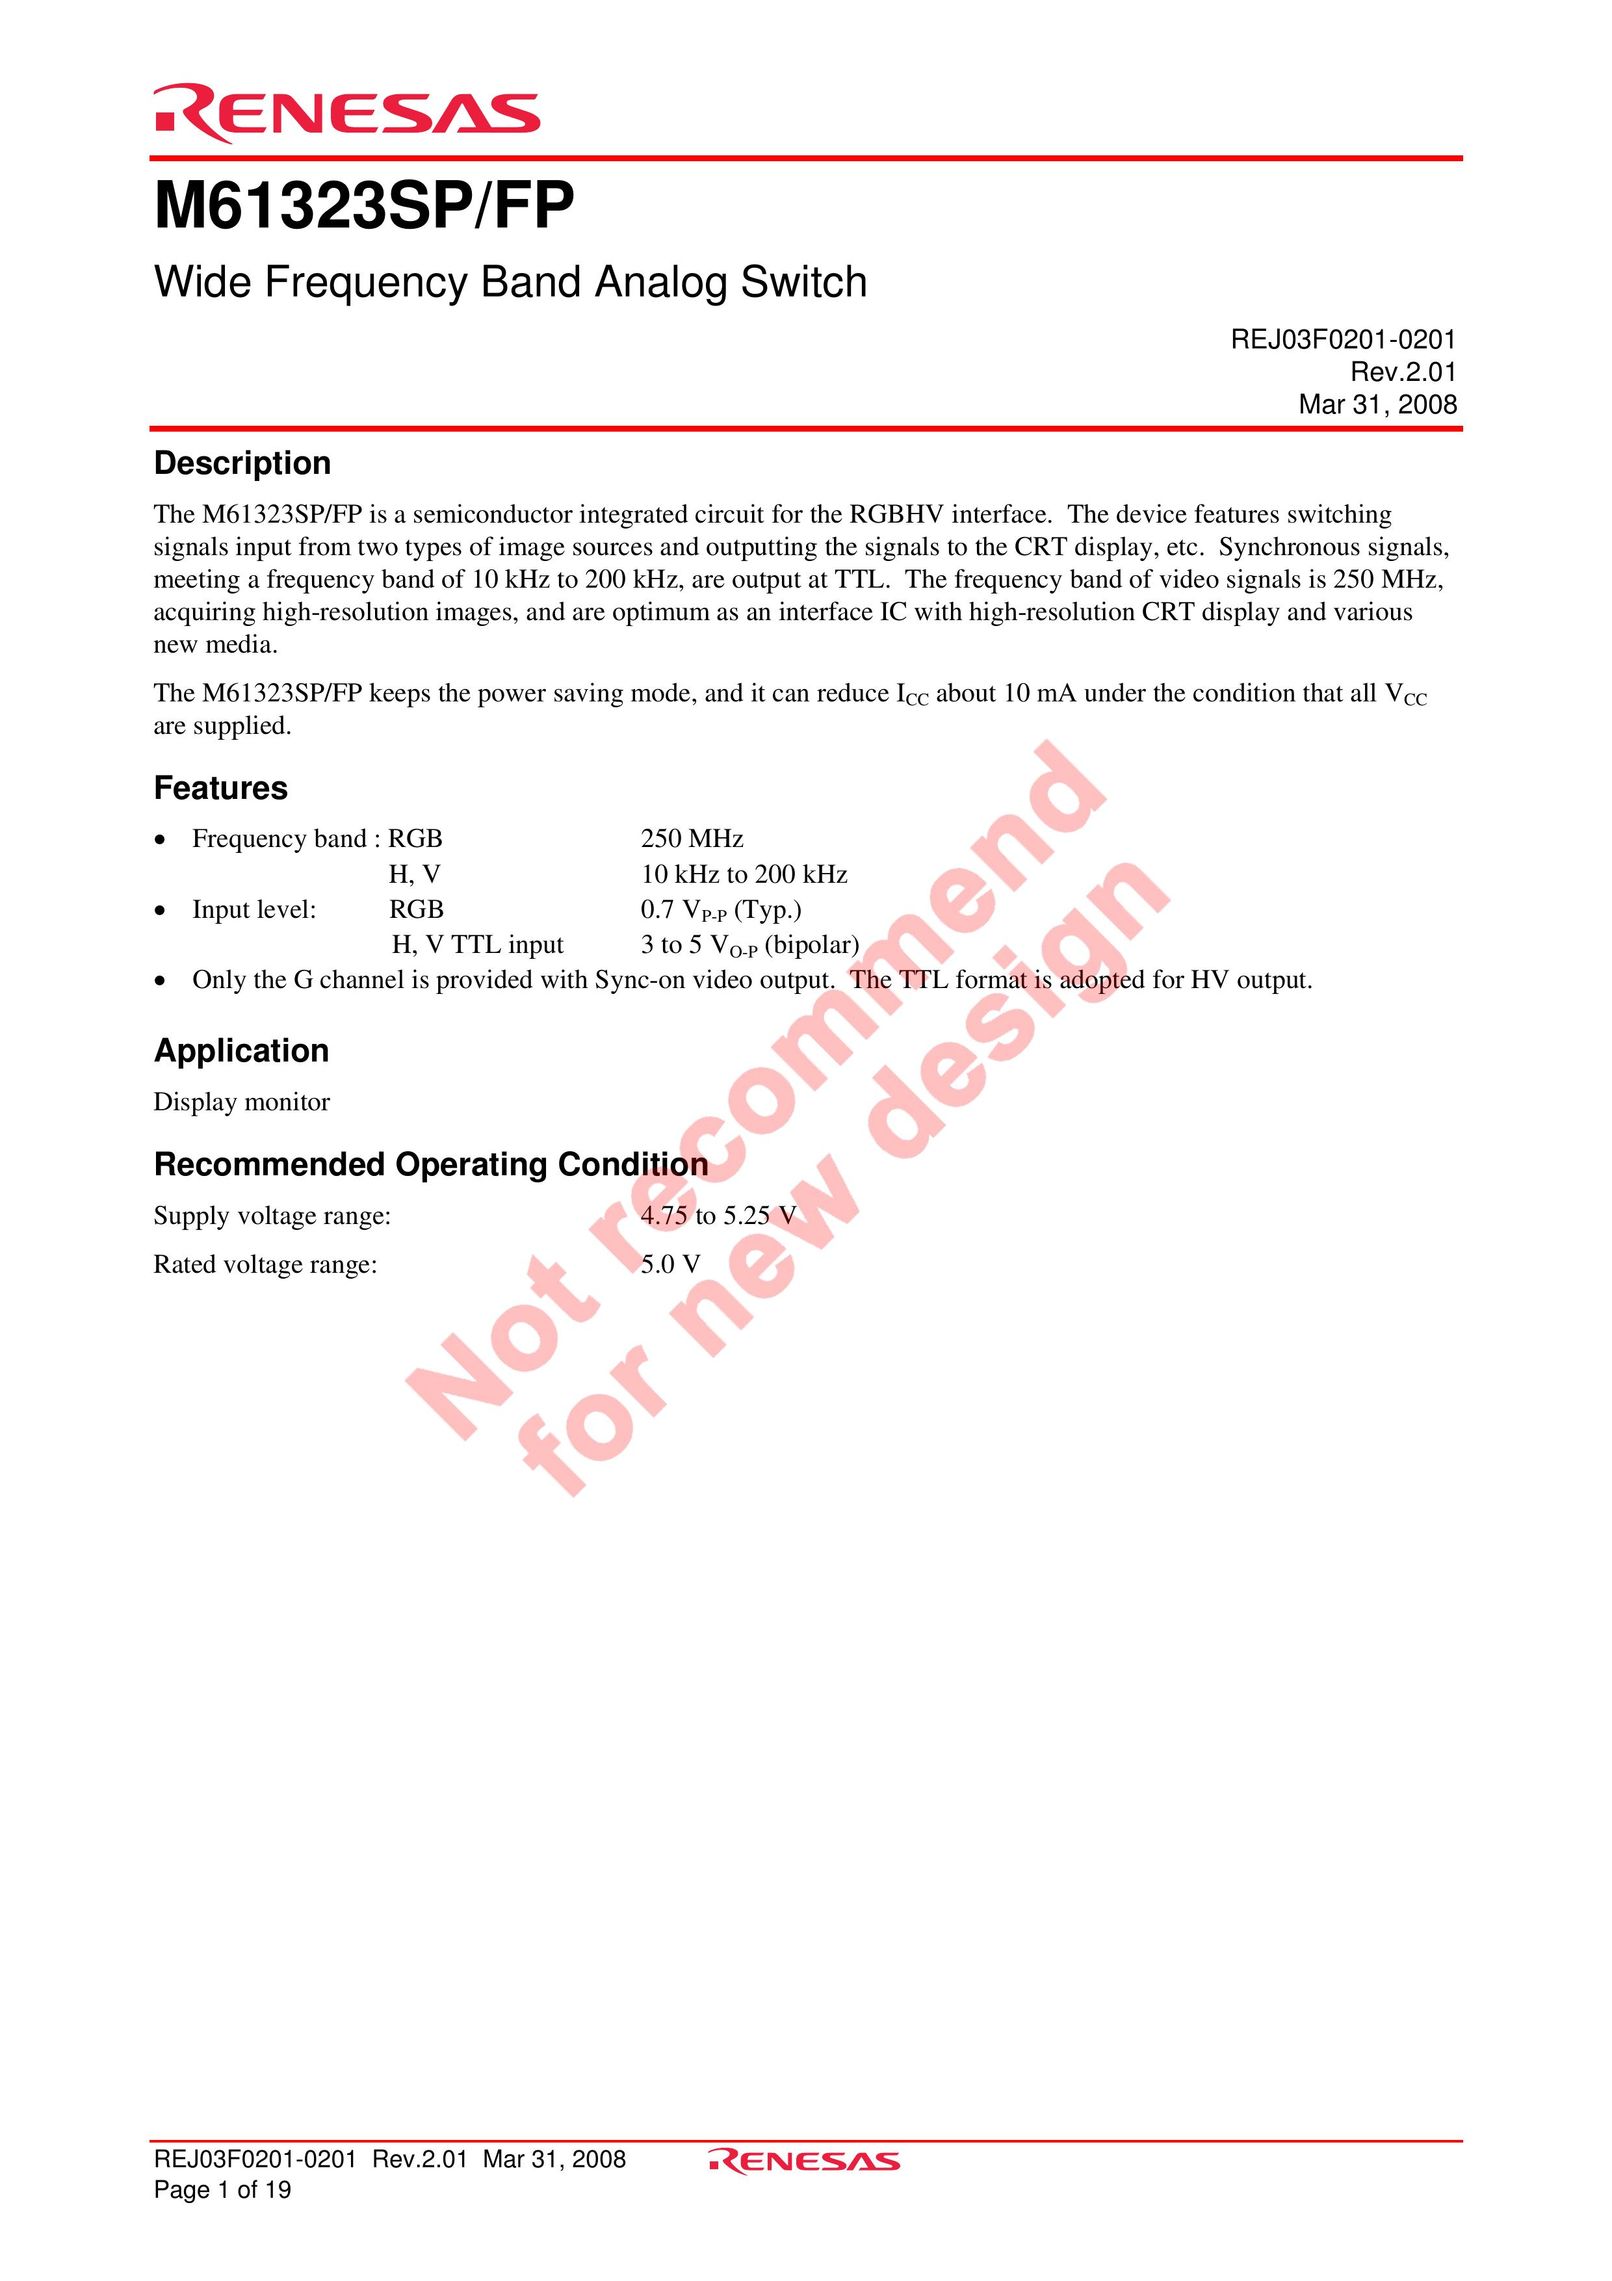 Renesas M61323SP/FP Switch User Manual